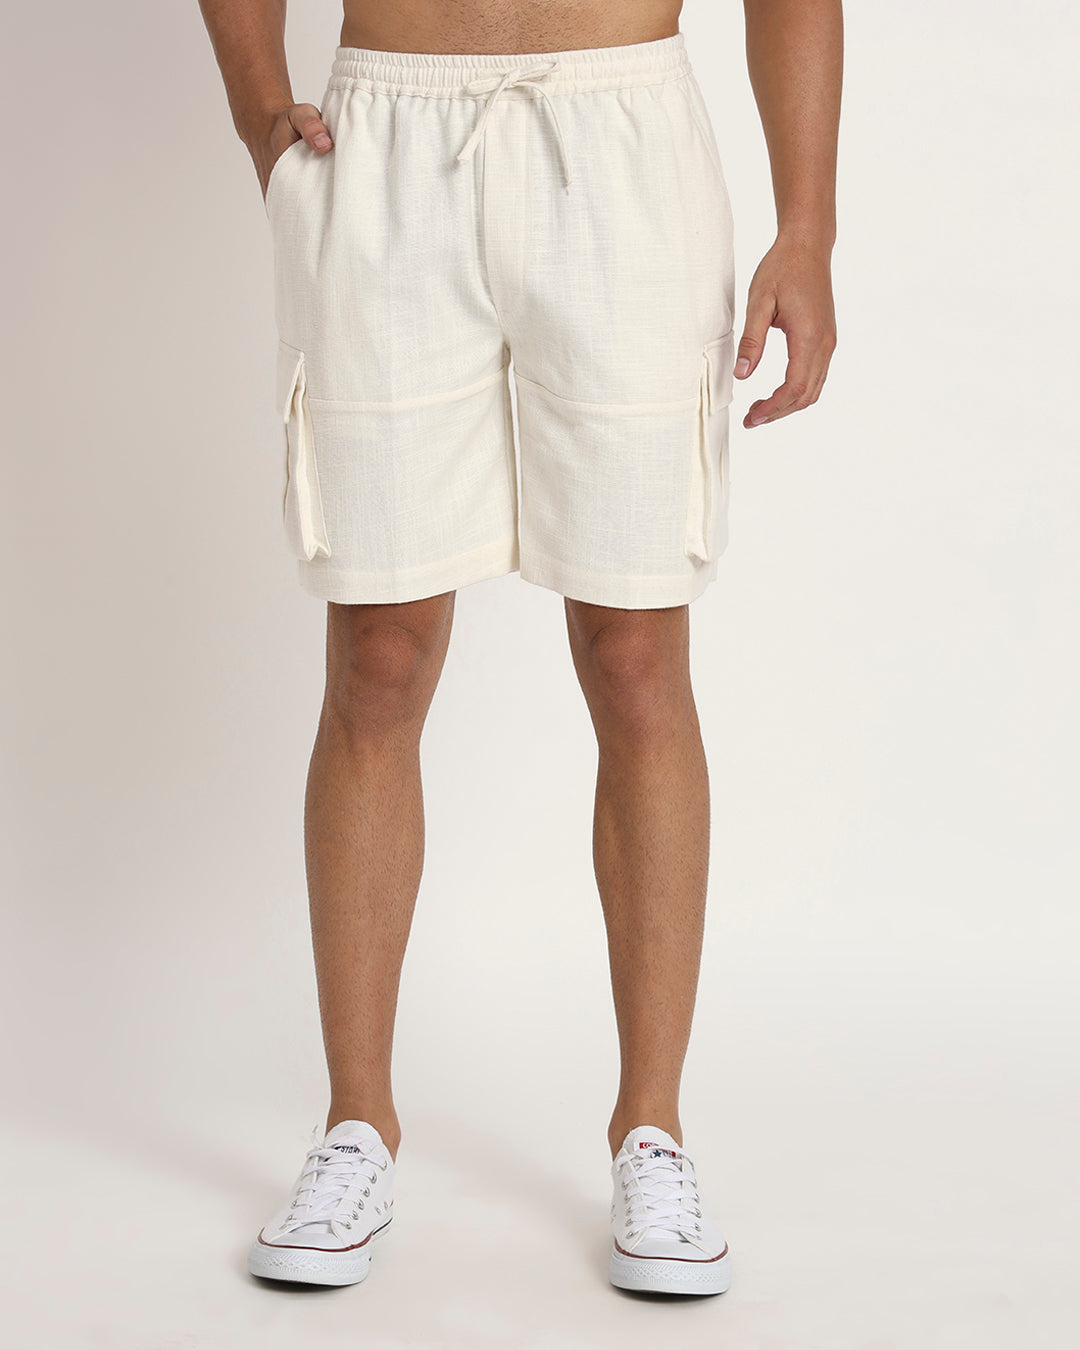 Combo: Classic Blush In Love Half Sleeves Men's Shirt & Cargo Shorts